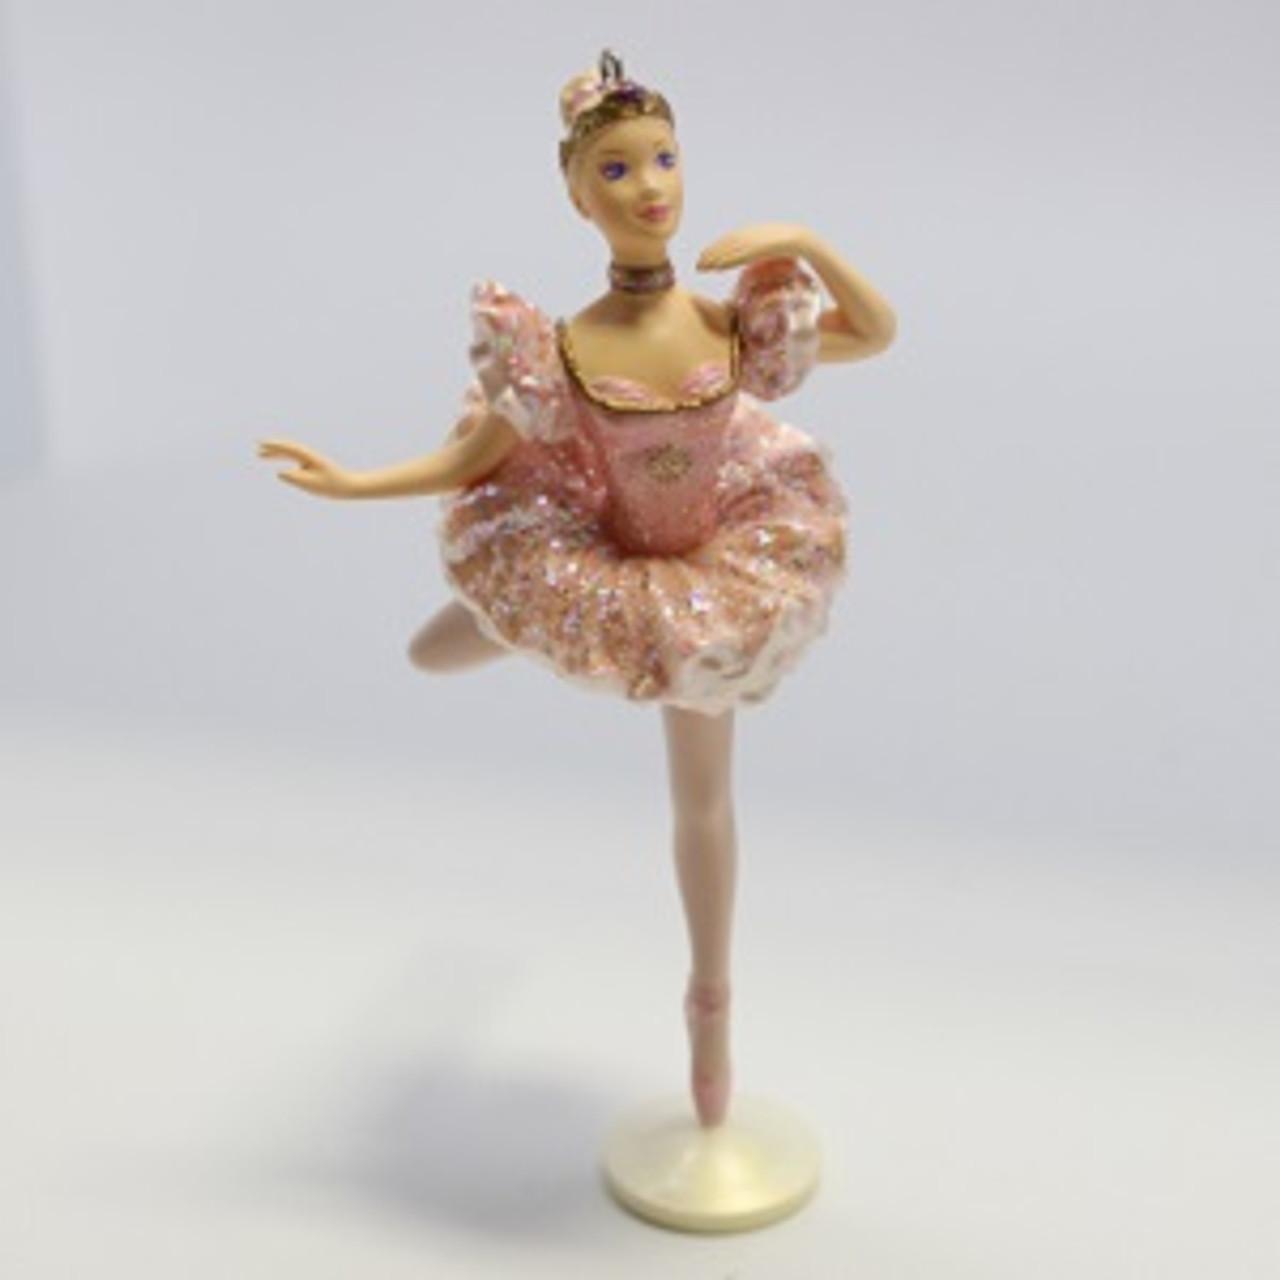 2000 Barbie - Ballerina